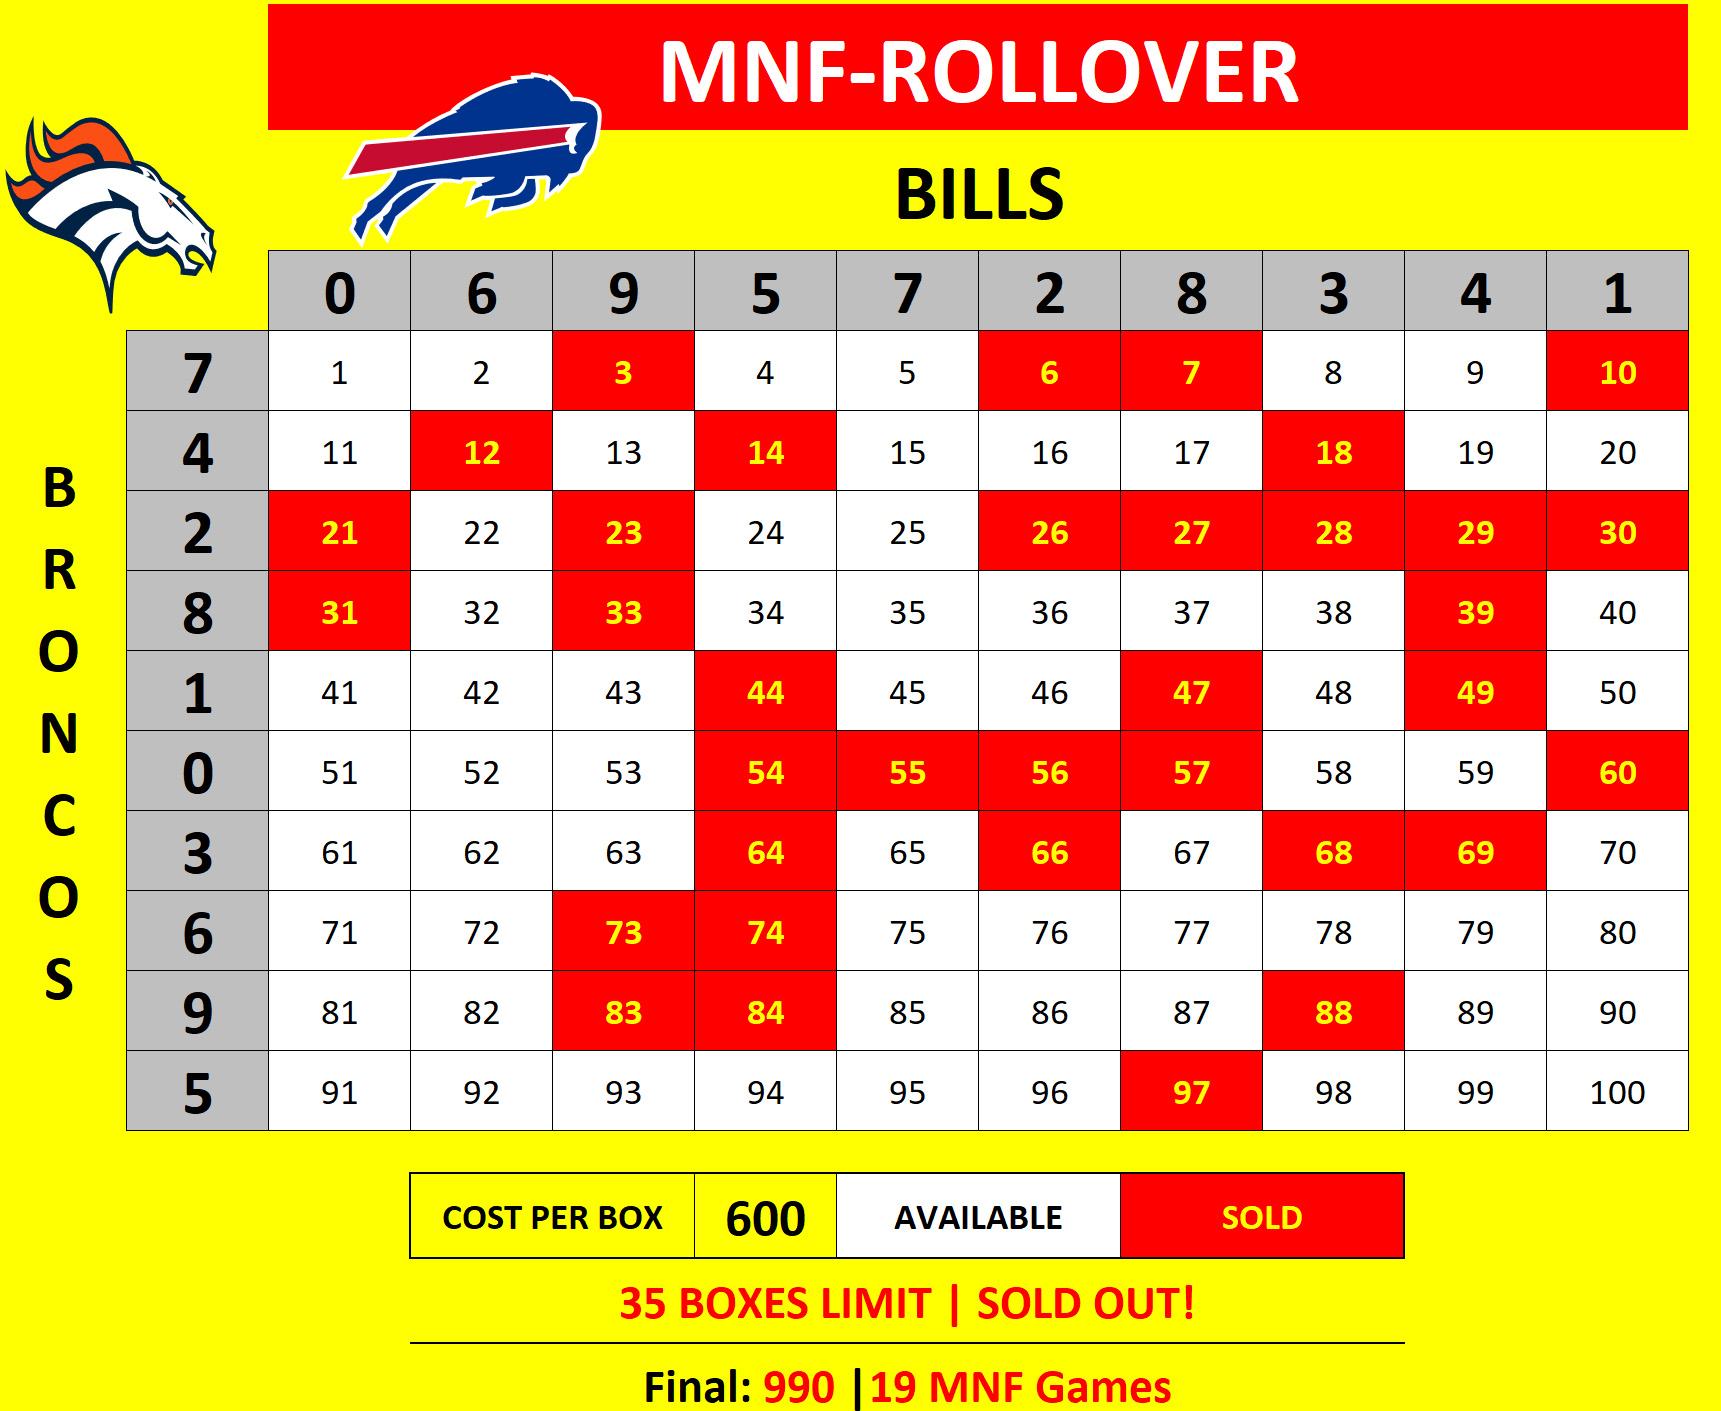 MNF-Rollover-B Broncos at Bills